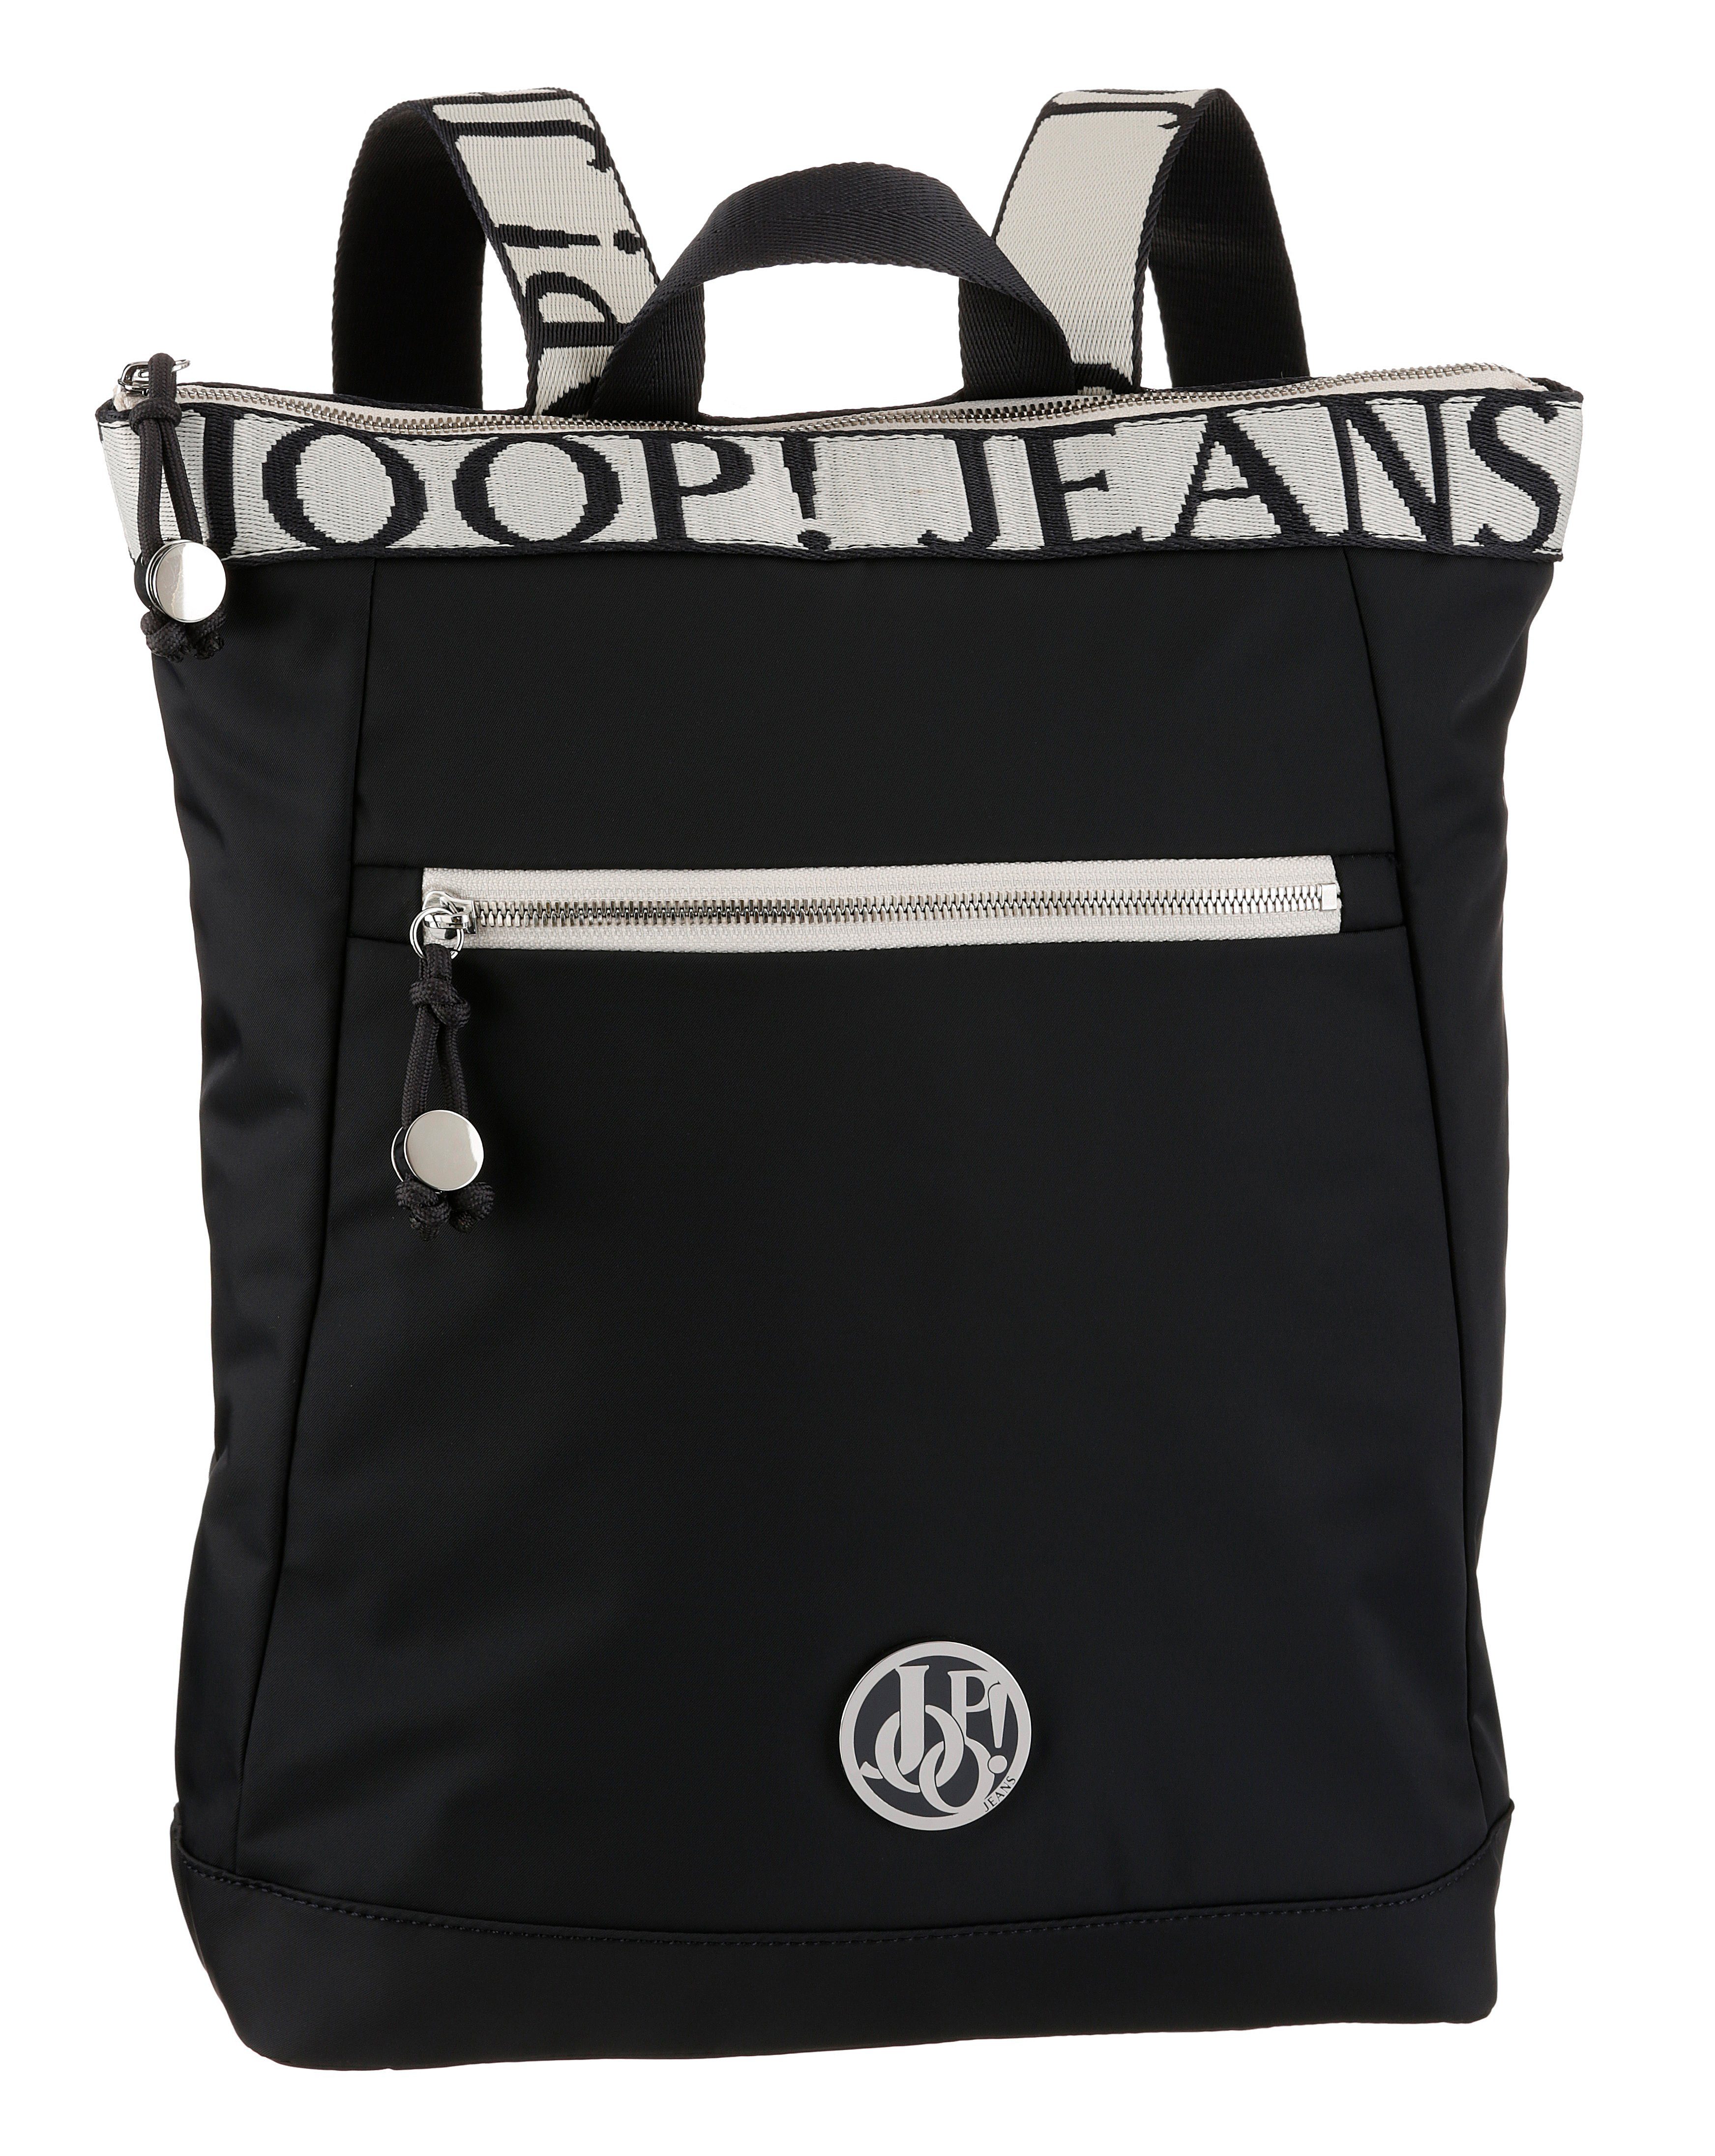 Berühmte Marken Joop Jeans Cityrucksack lietissimo elva Logo auf den lvz, Schriftzug backpack mit nightblue Trageriemen